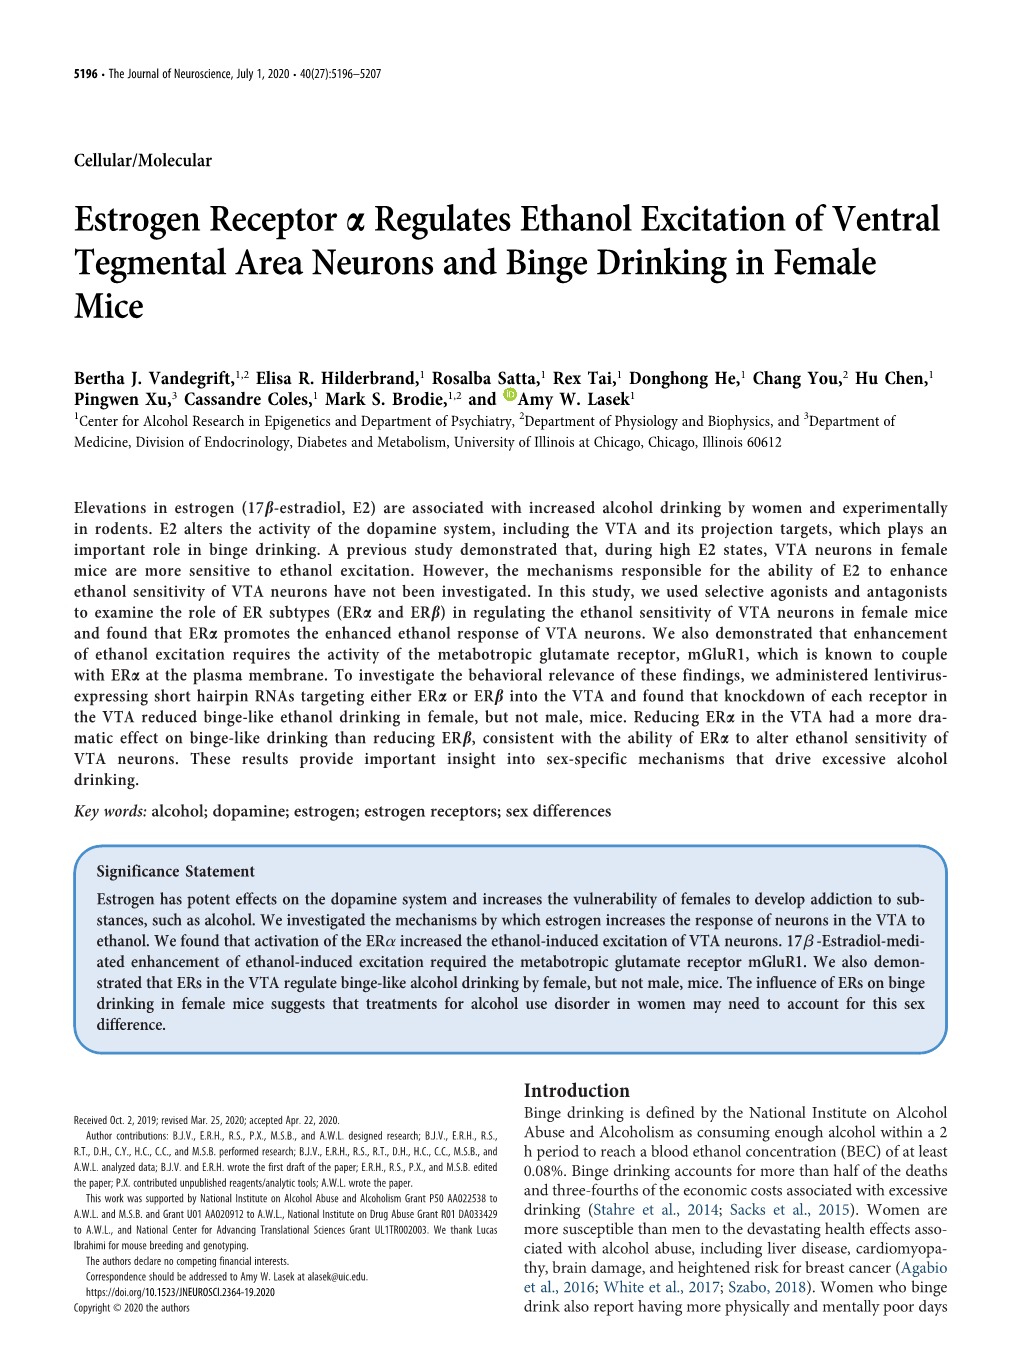 Estrogen Receptor Α Regulates Ethanol Excitation of Ventral Tegmental Area Neurons and Binge Drinking in Female Mice